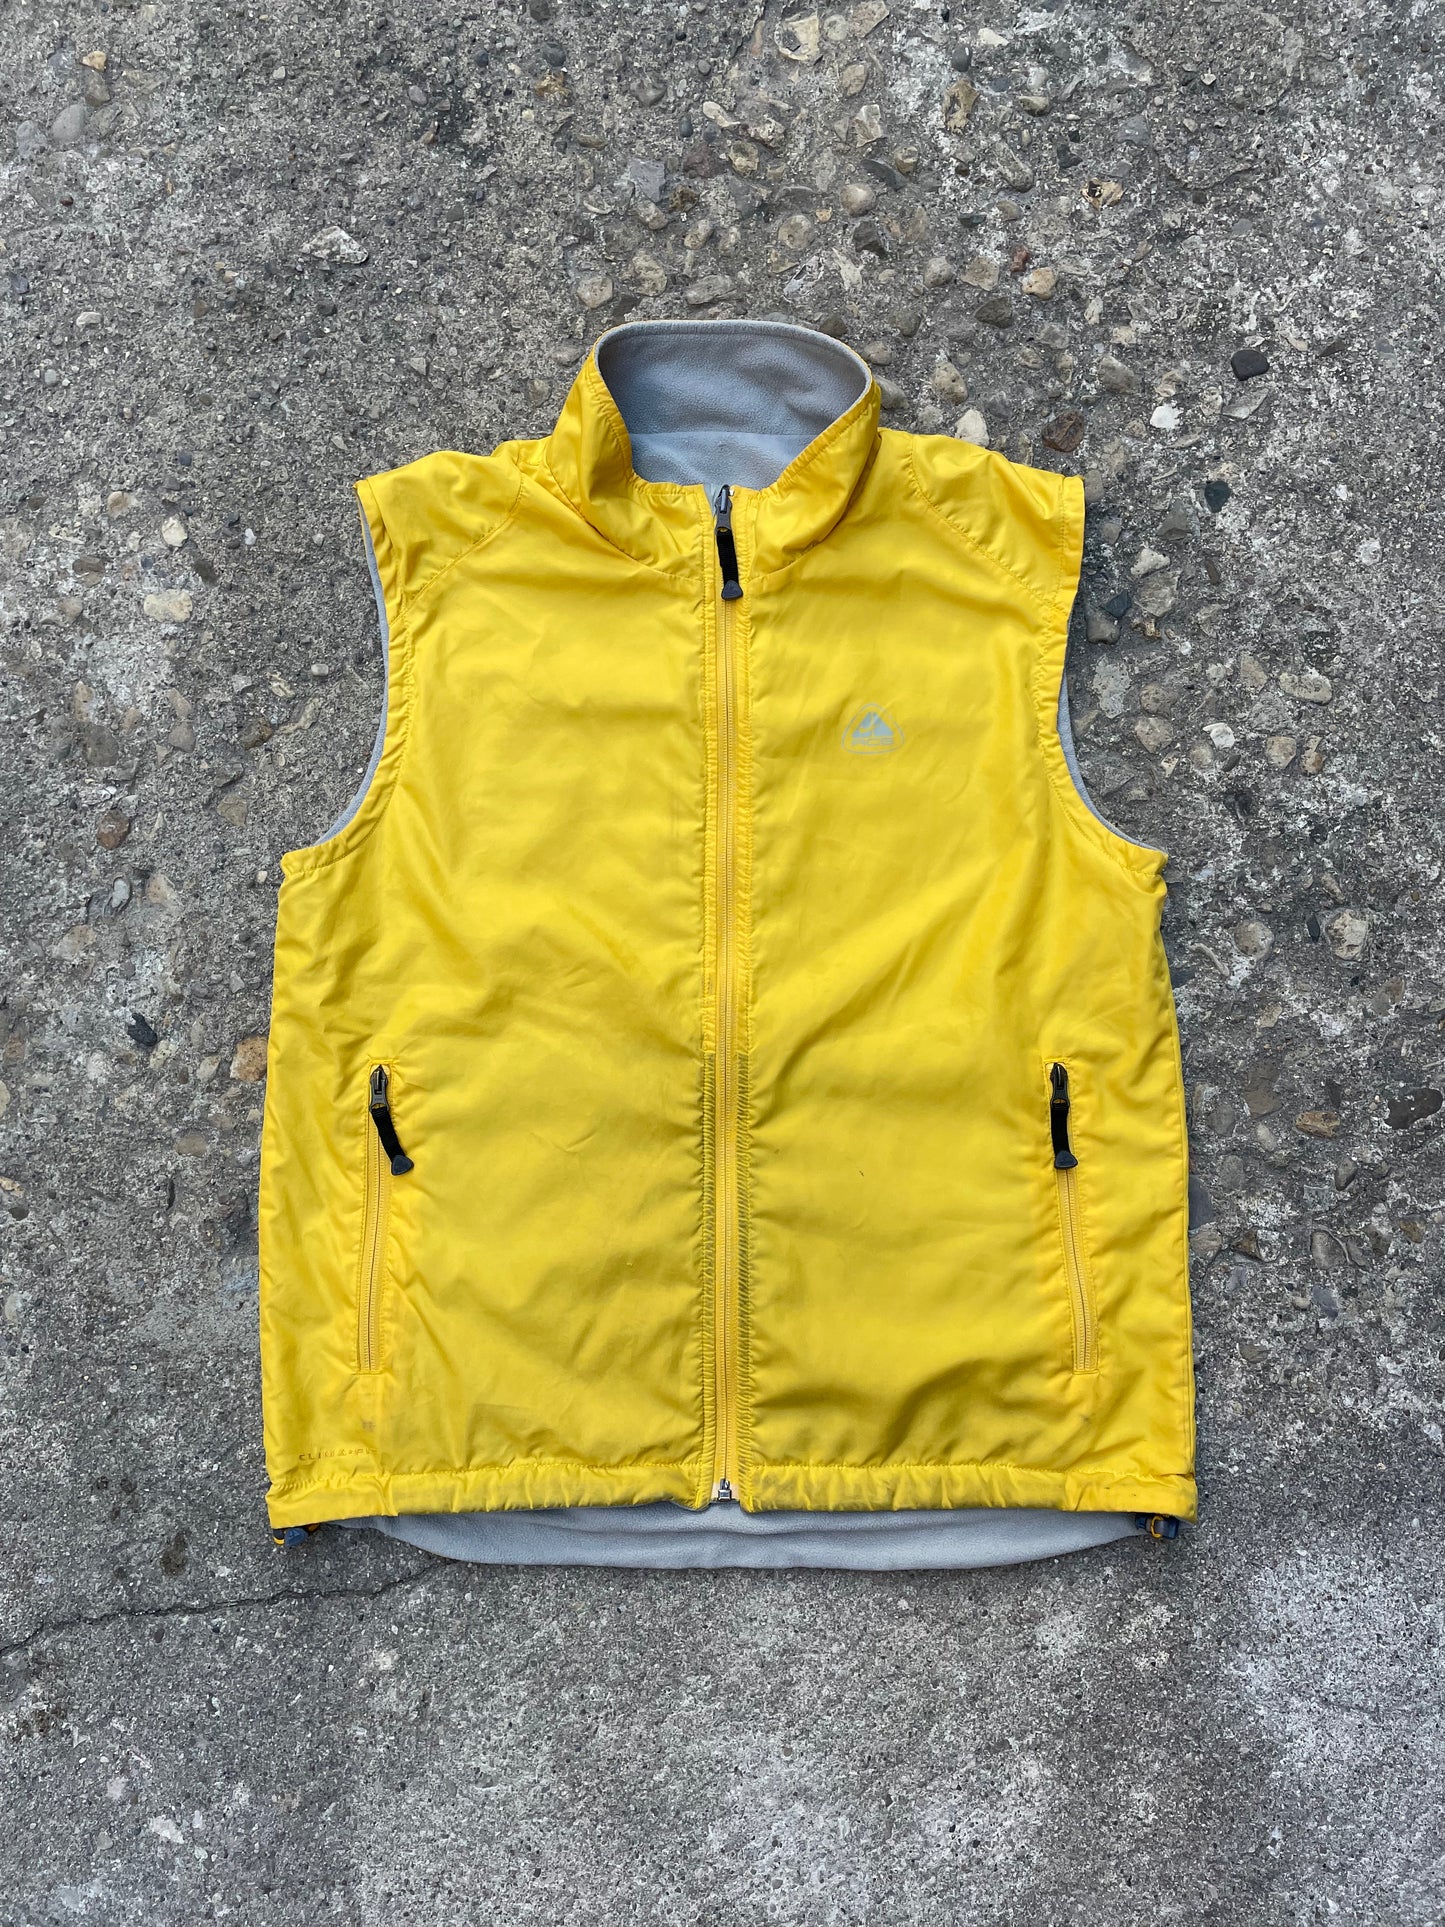 1990's/2000's Nike ACG Reversible Vest - L